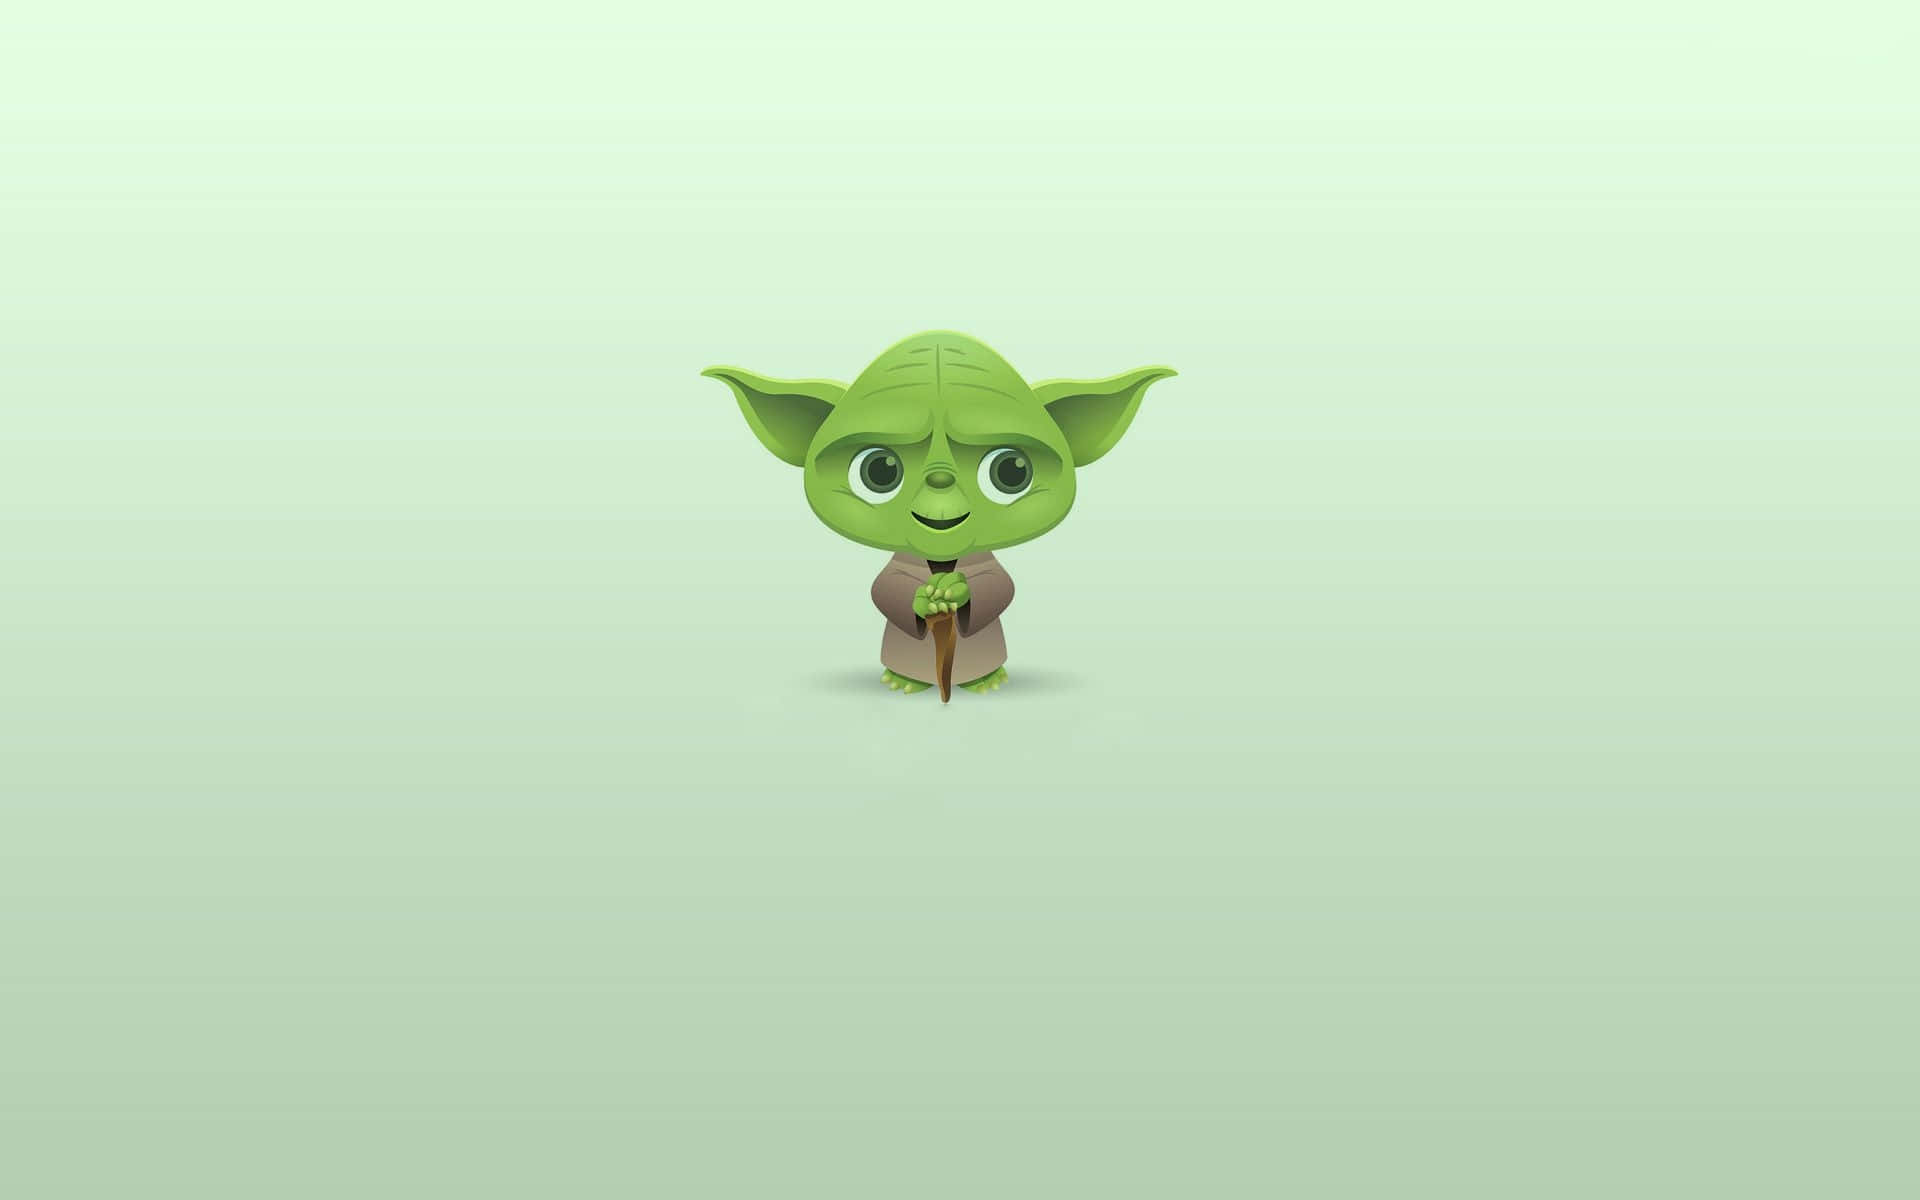 Cute Funny Star Wars Yoda Wallpaper